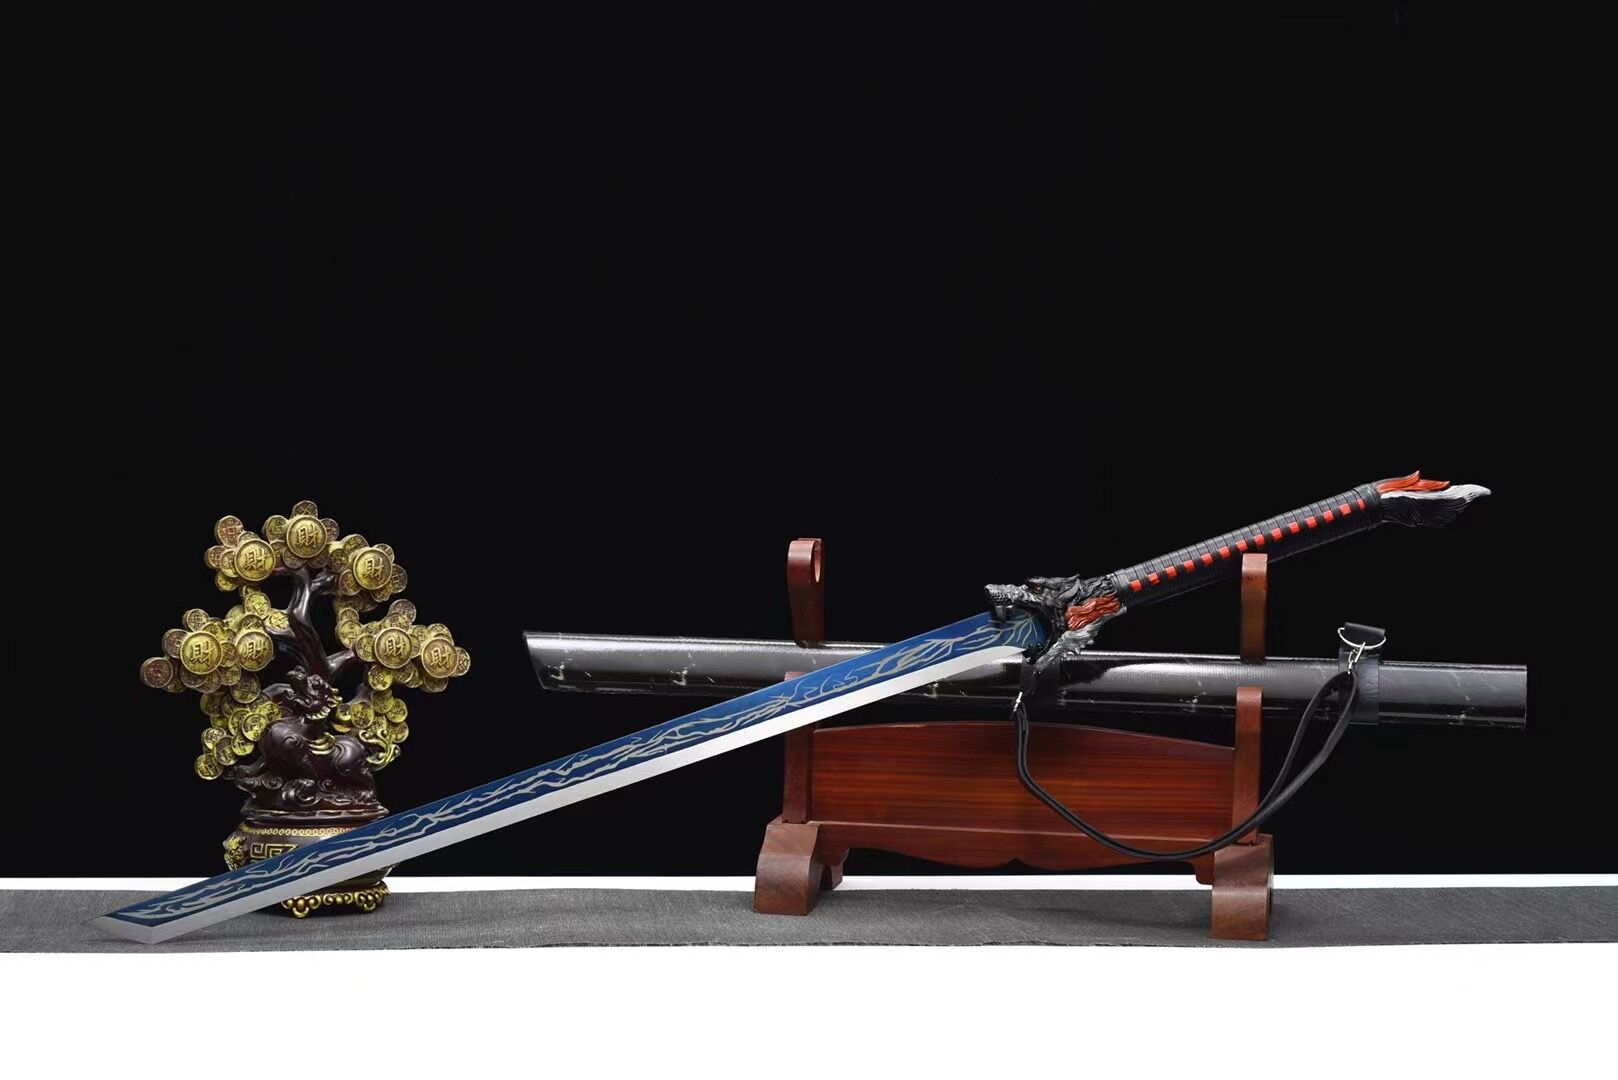 Blood Wolf Sword,Handicrafts,Tang-Horizontal Knife,Real Tang Sword,Handmade Chinese Sword,High manganese steel,Longquan sword